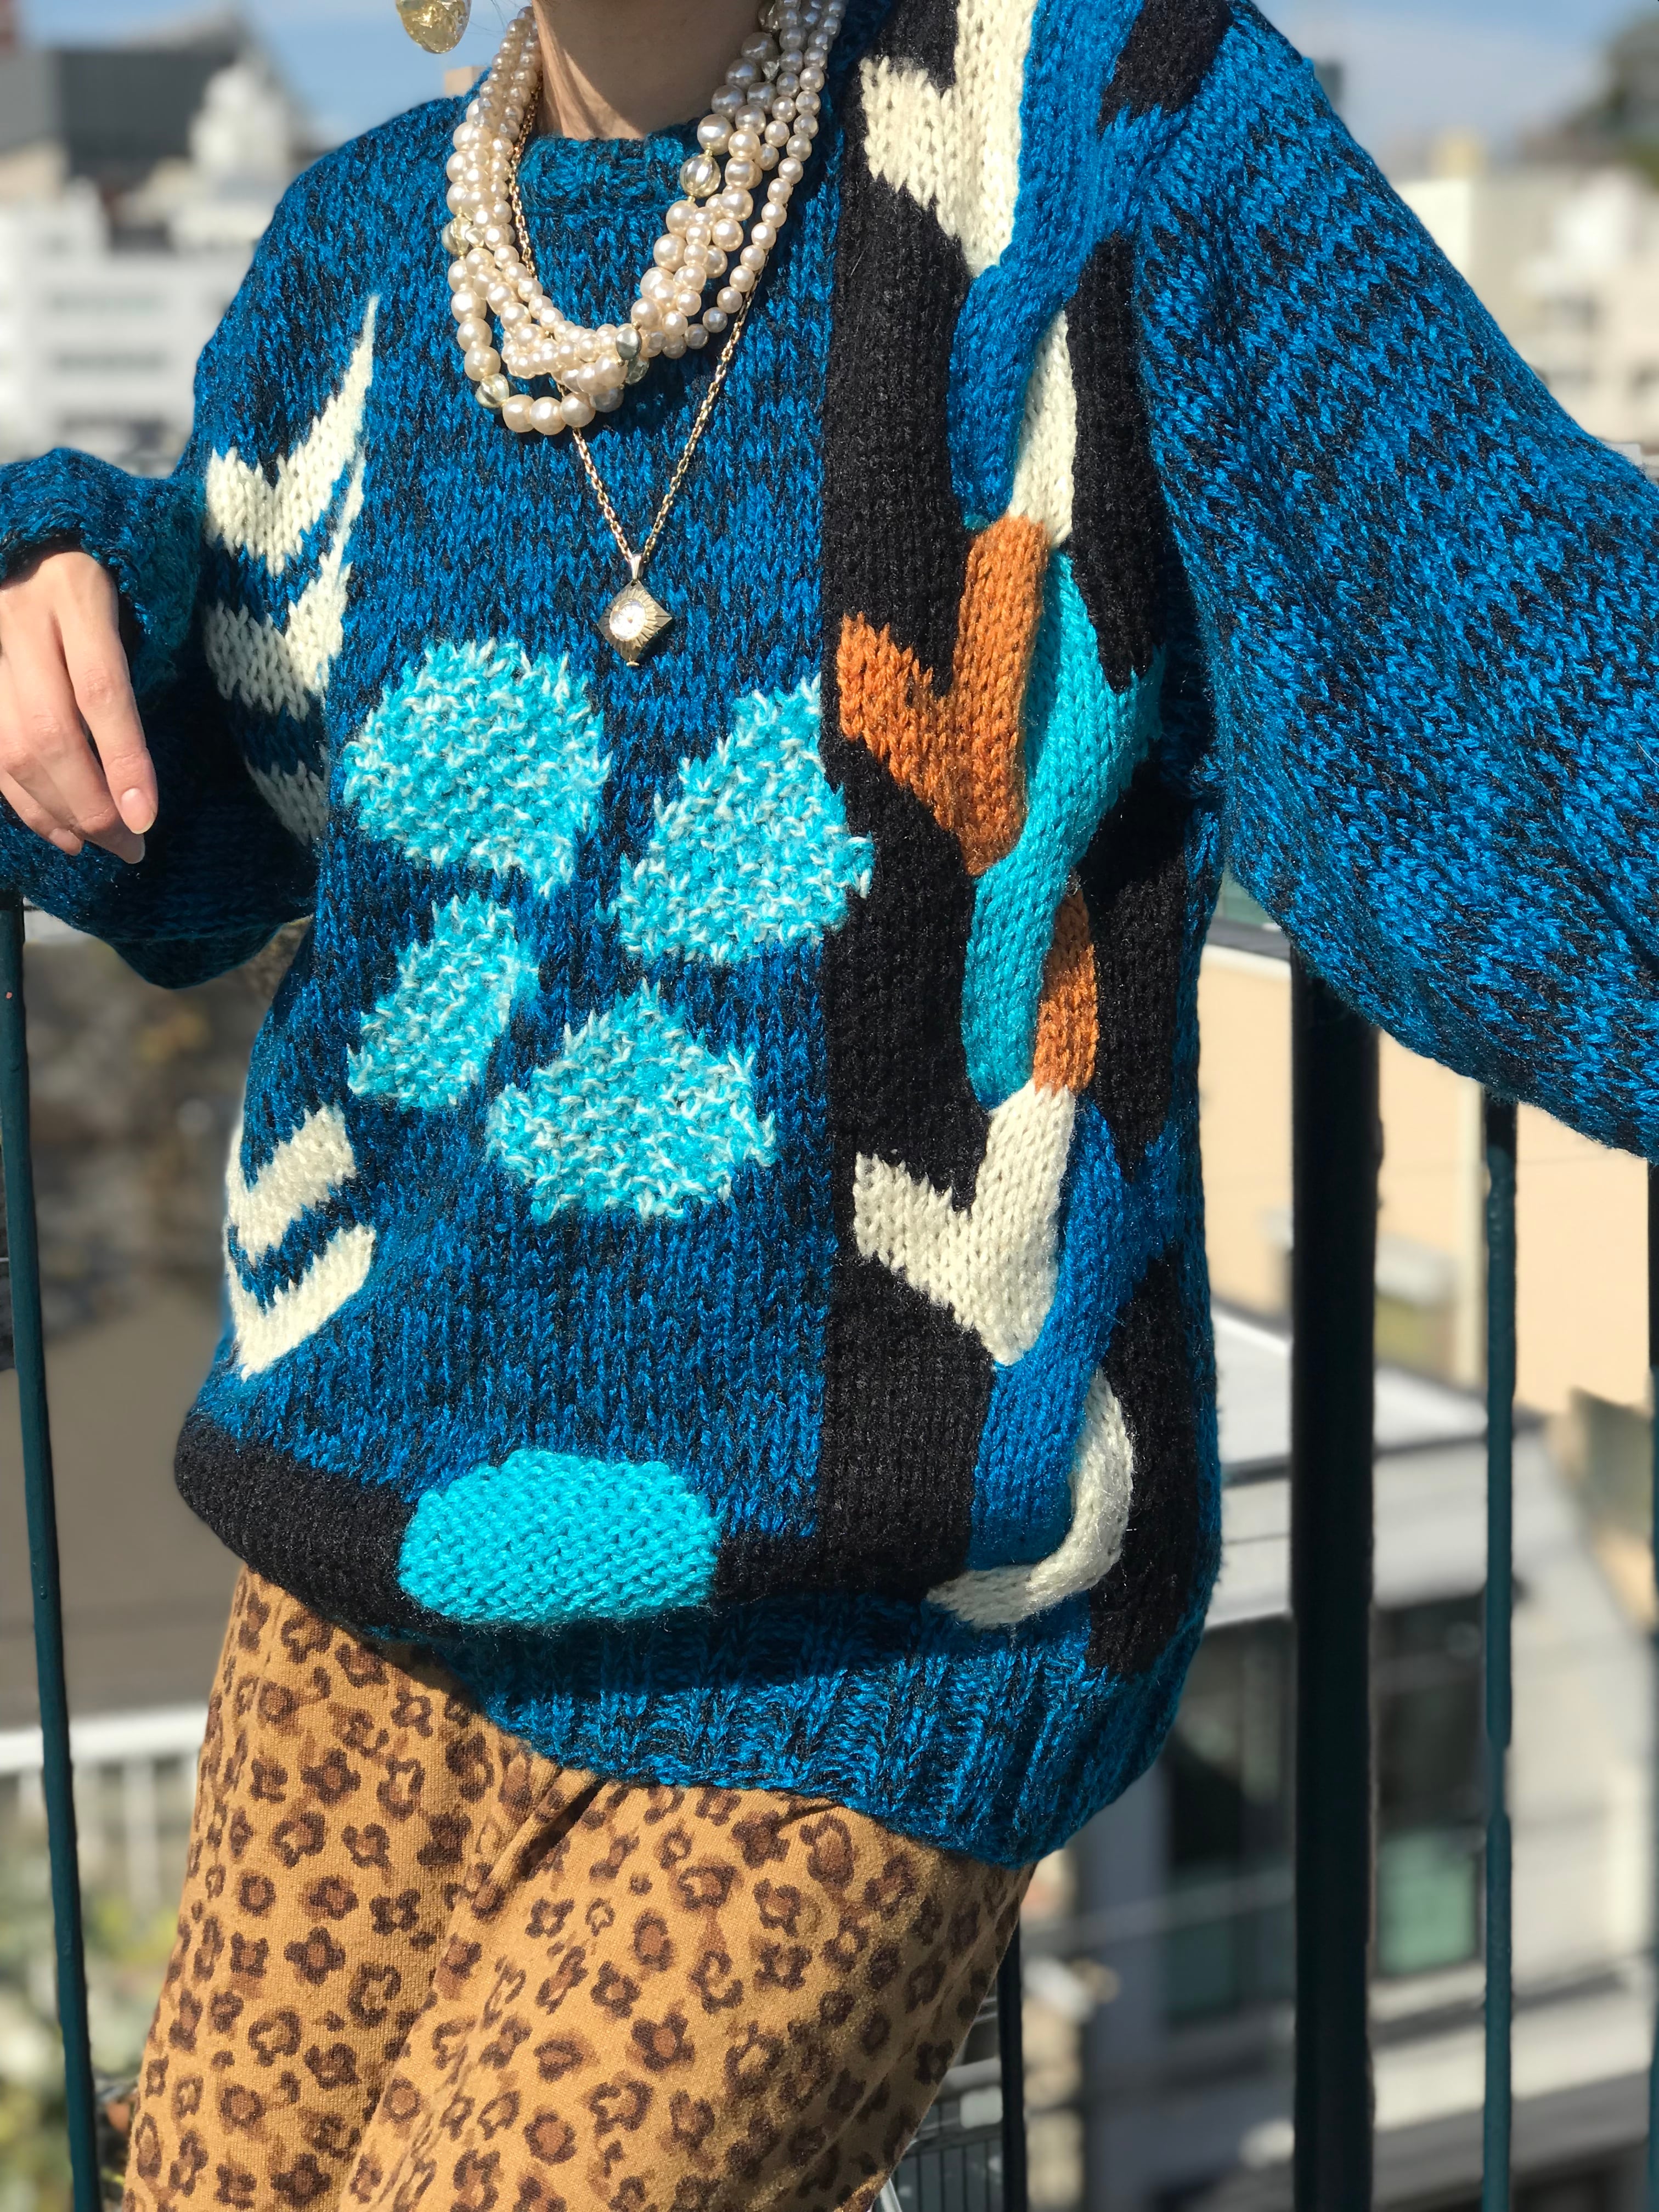 80s handmade floral wool knit tops ( ヴィンテージ ハンドメイド 